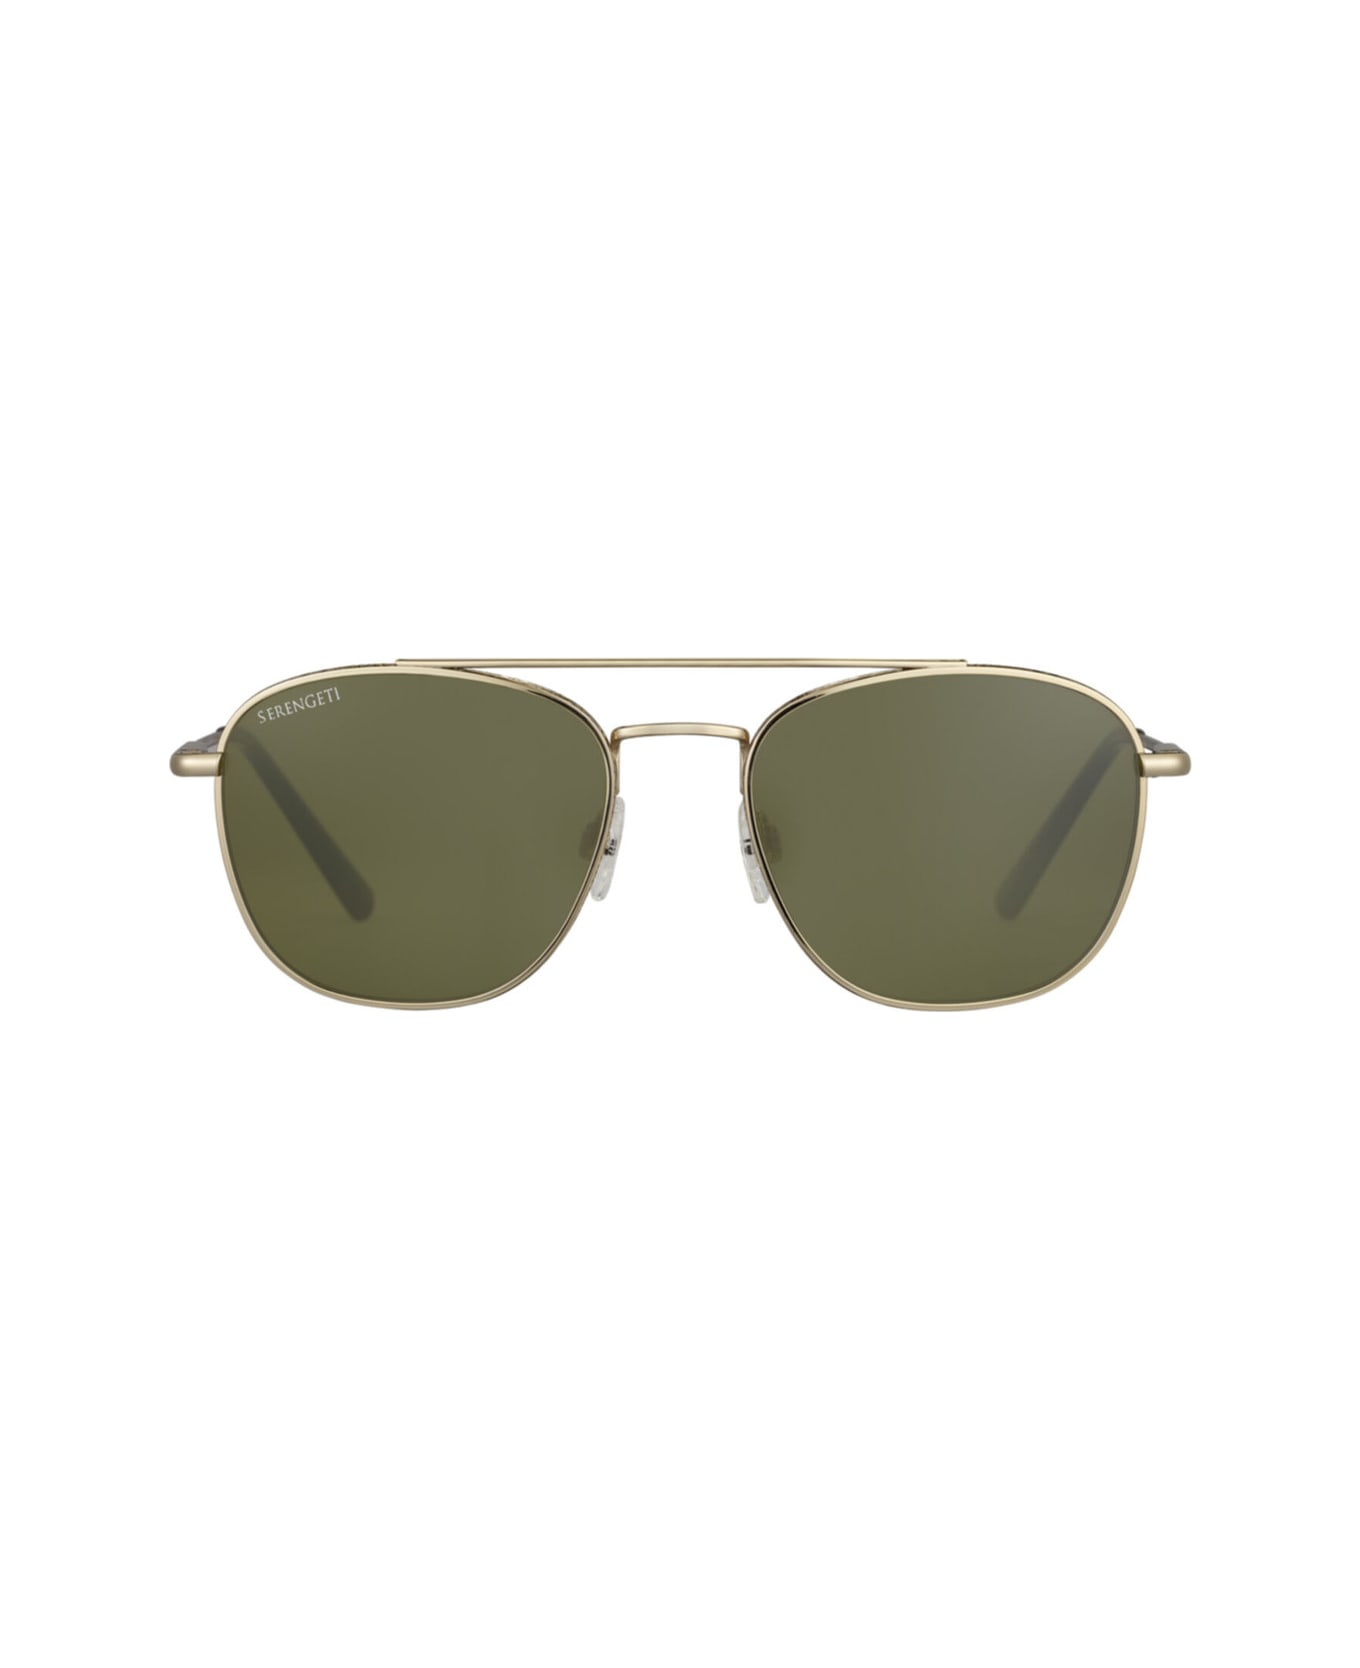 Serengeti Eyewear Ss5542 001 Sunglasses - Shiny Light Gold